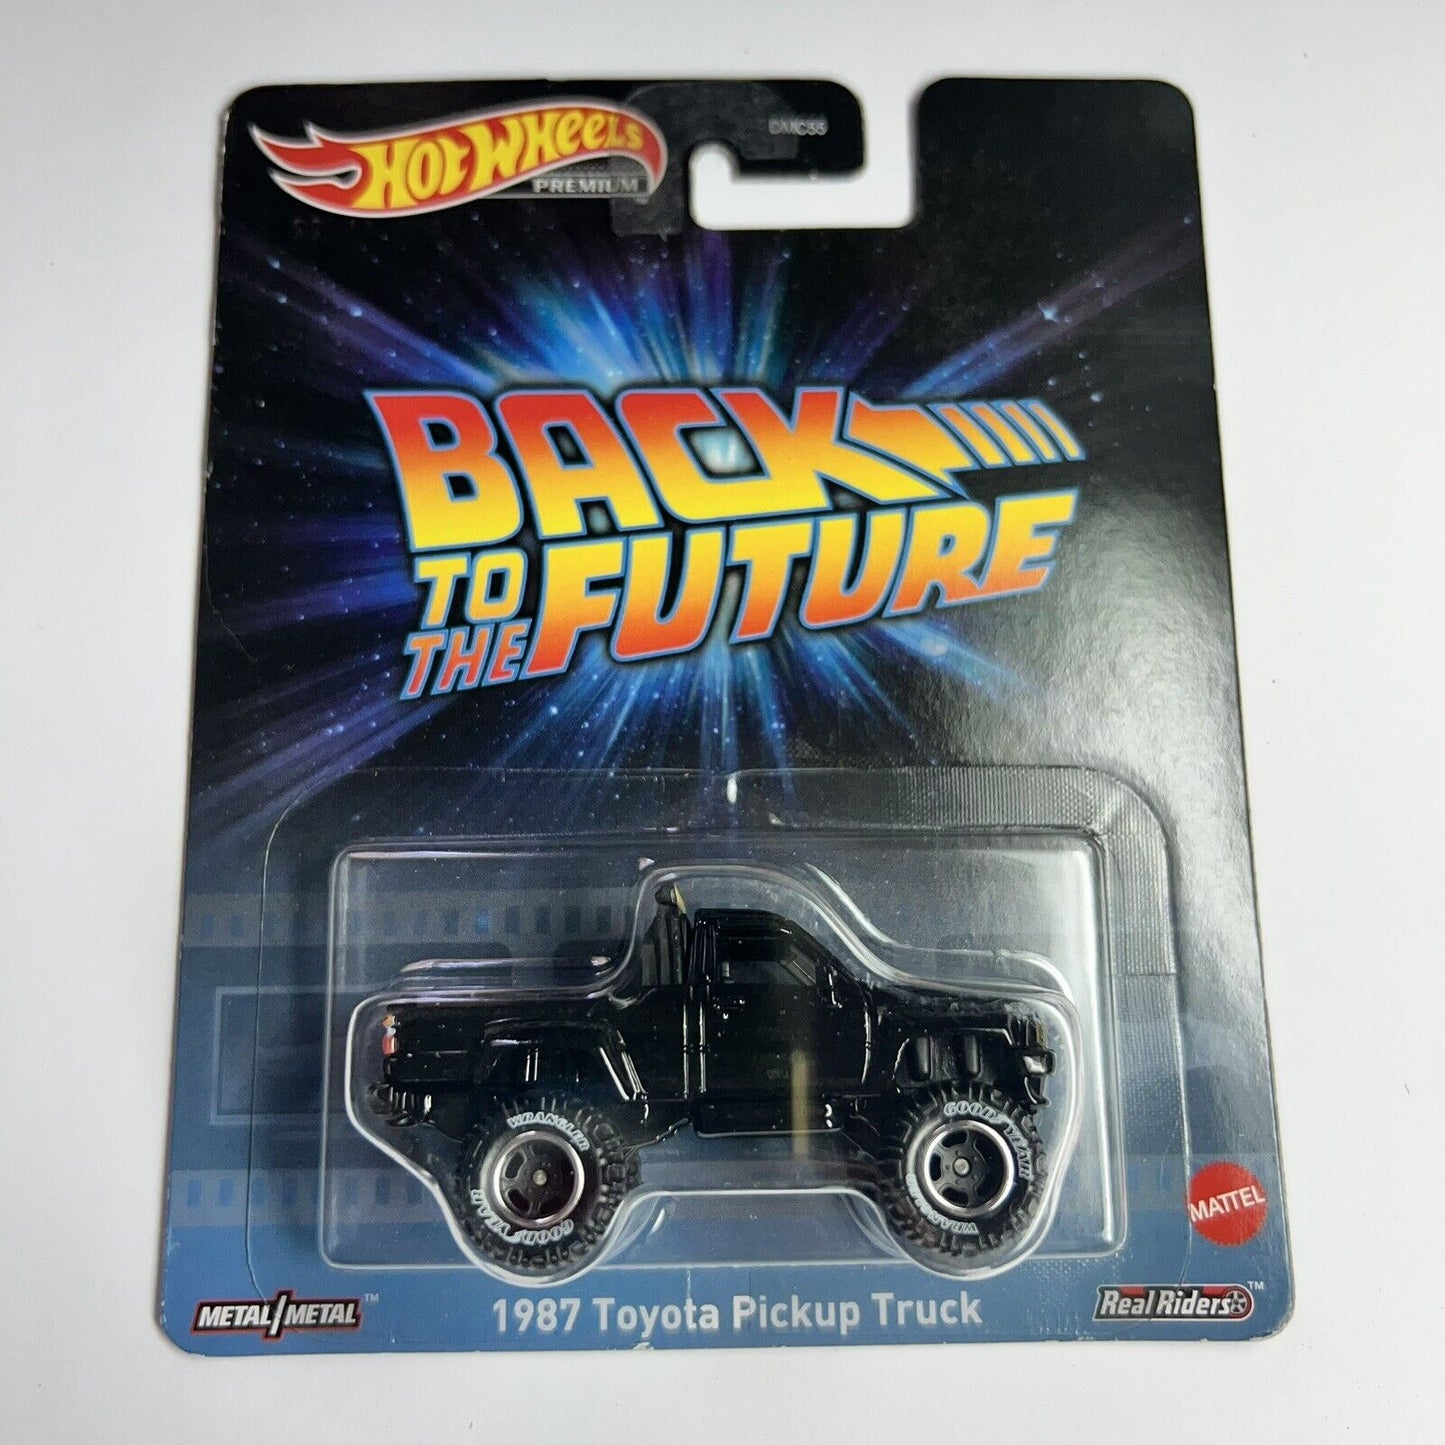 Hot Wheels Premium Back to The Future 1987 Toyota Truck